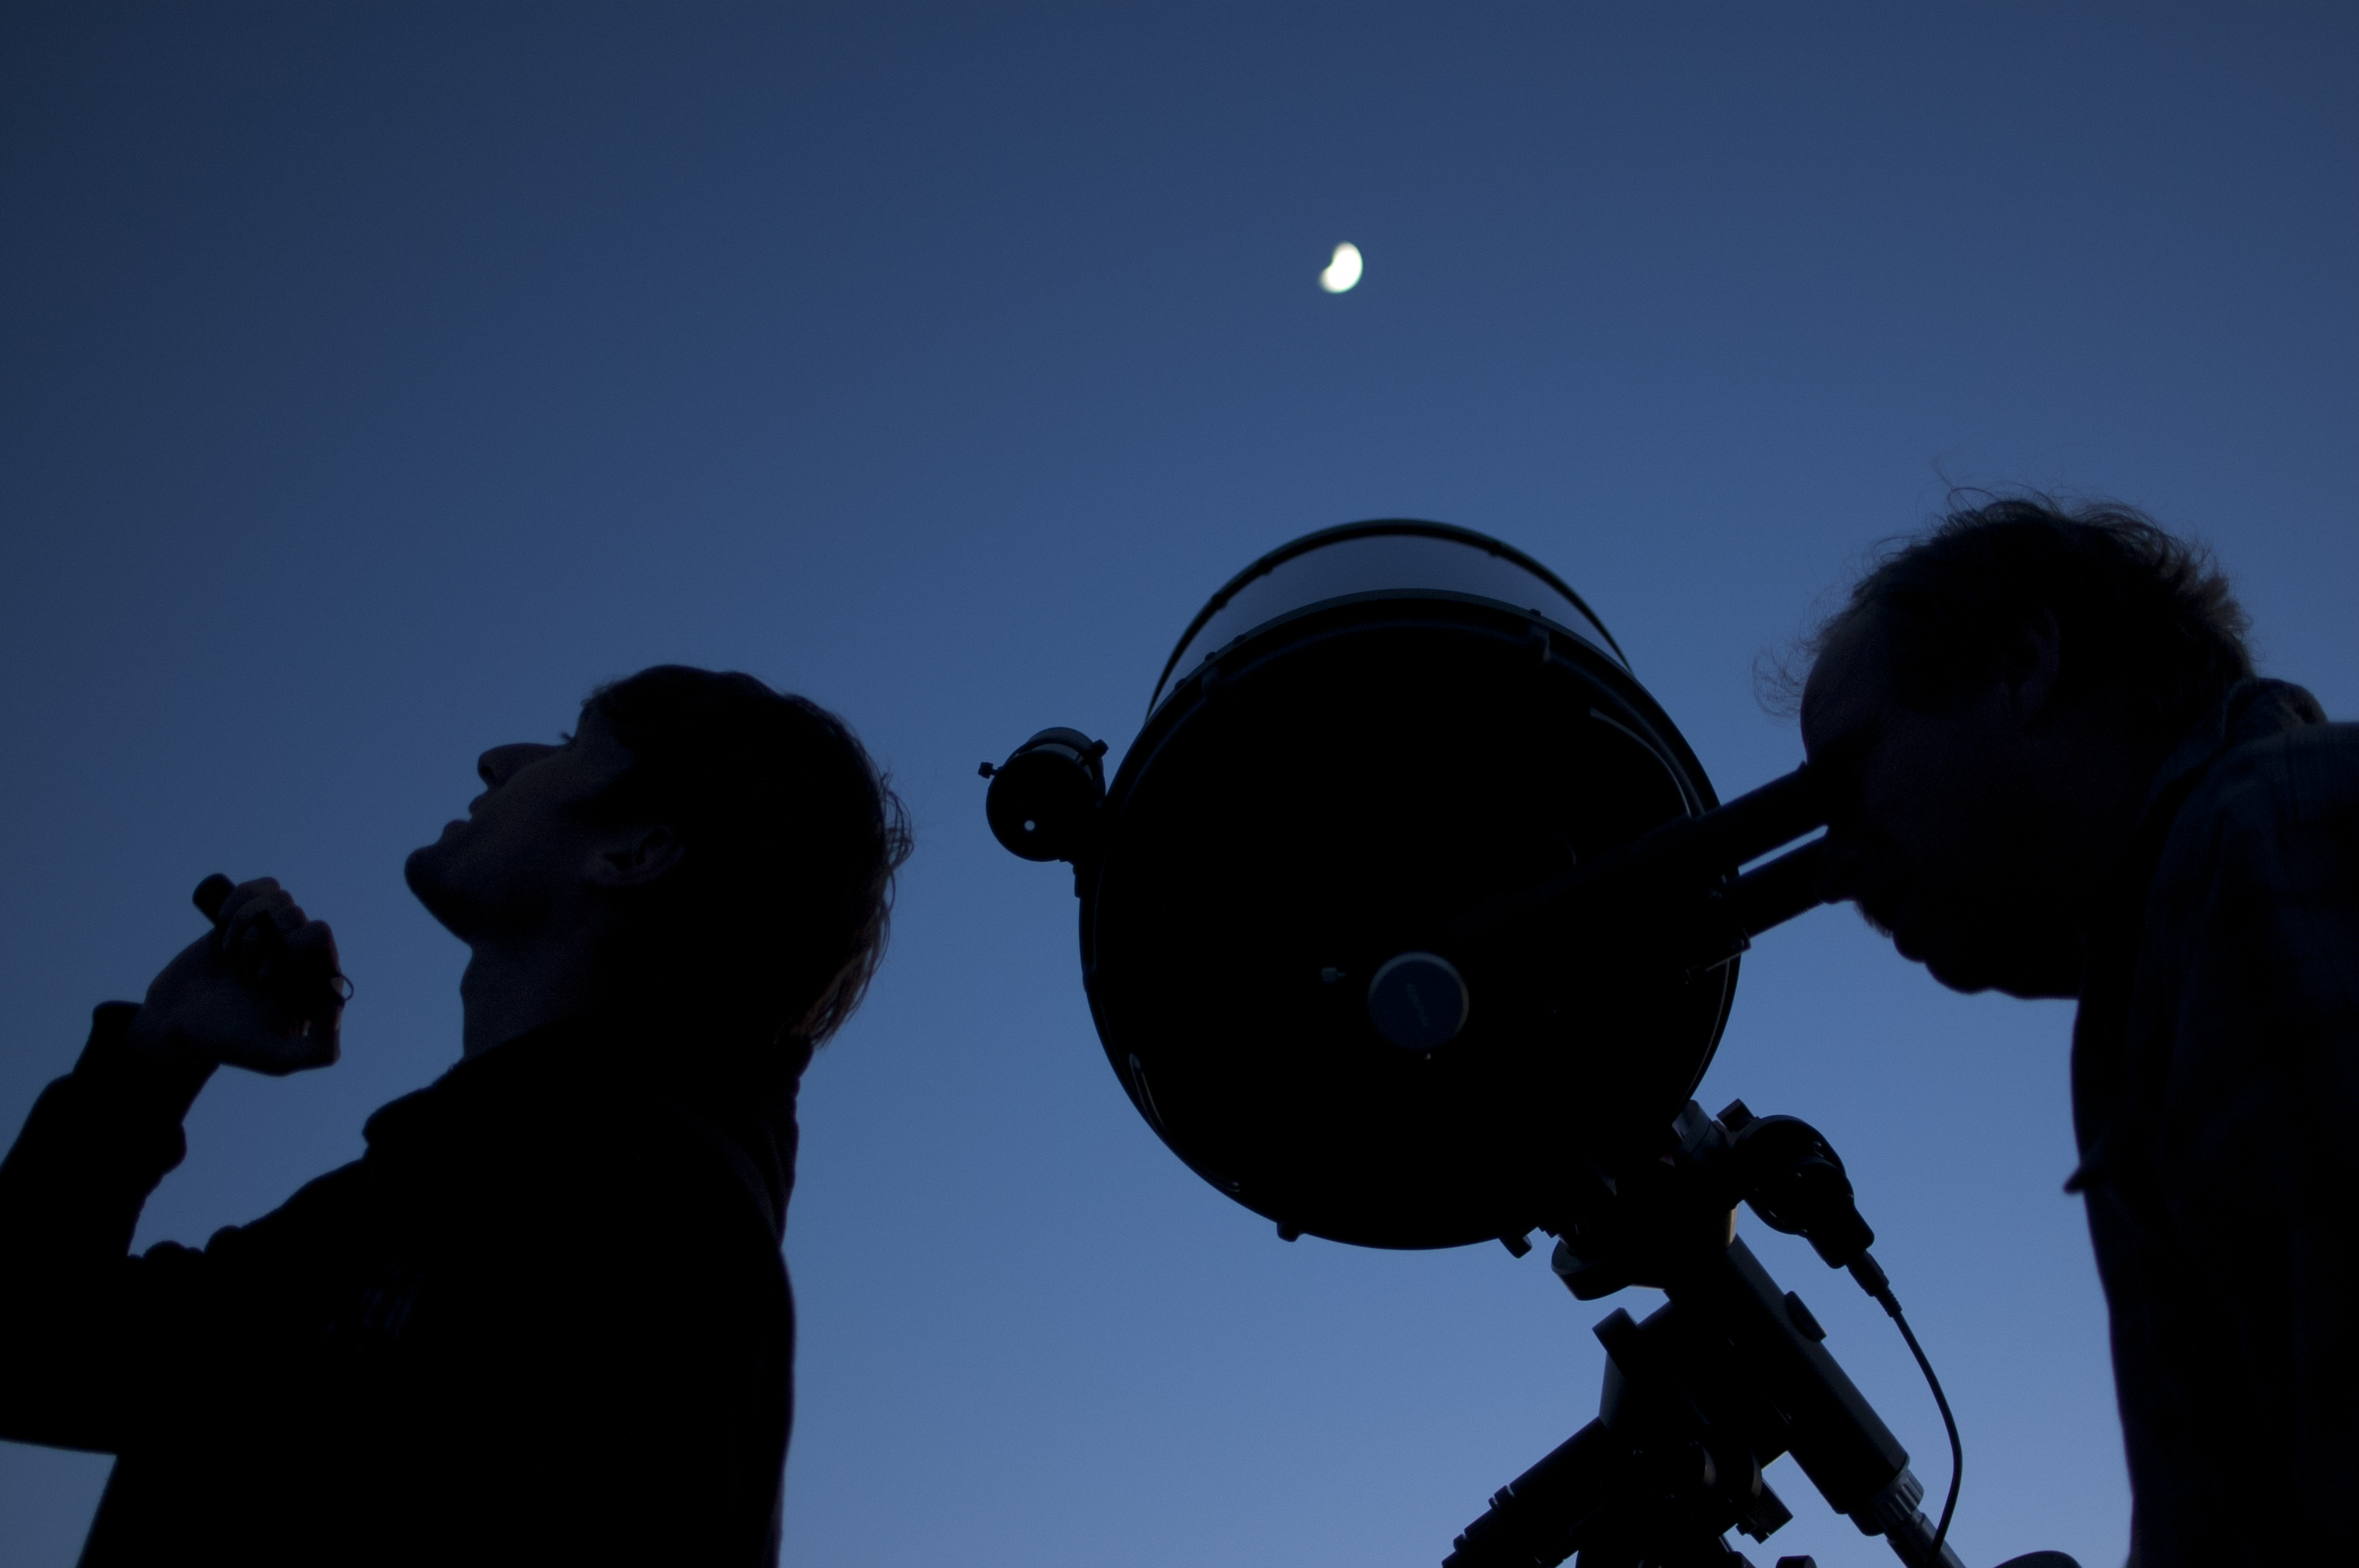 saguaro amateur astronomy club